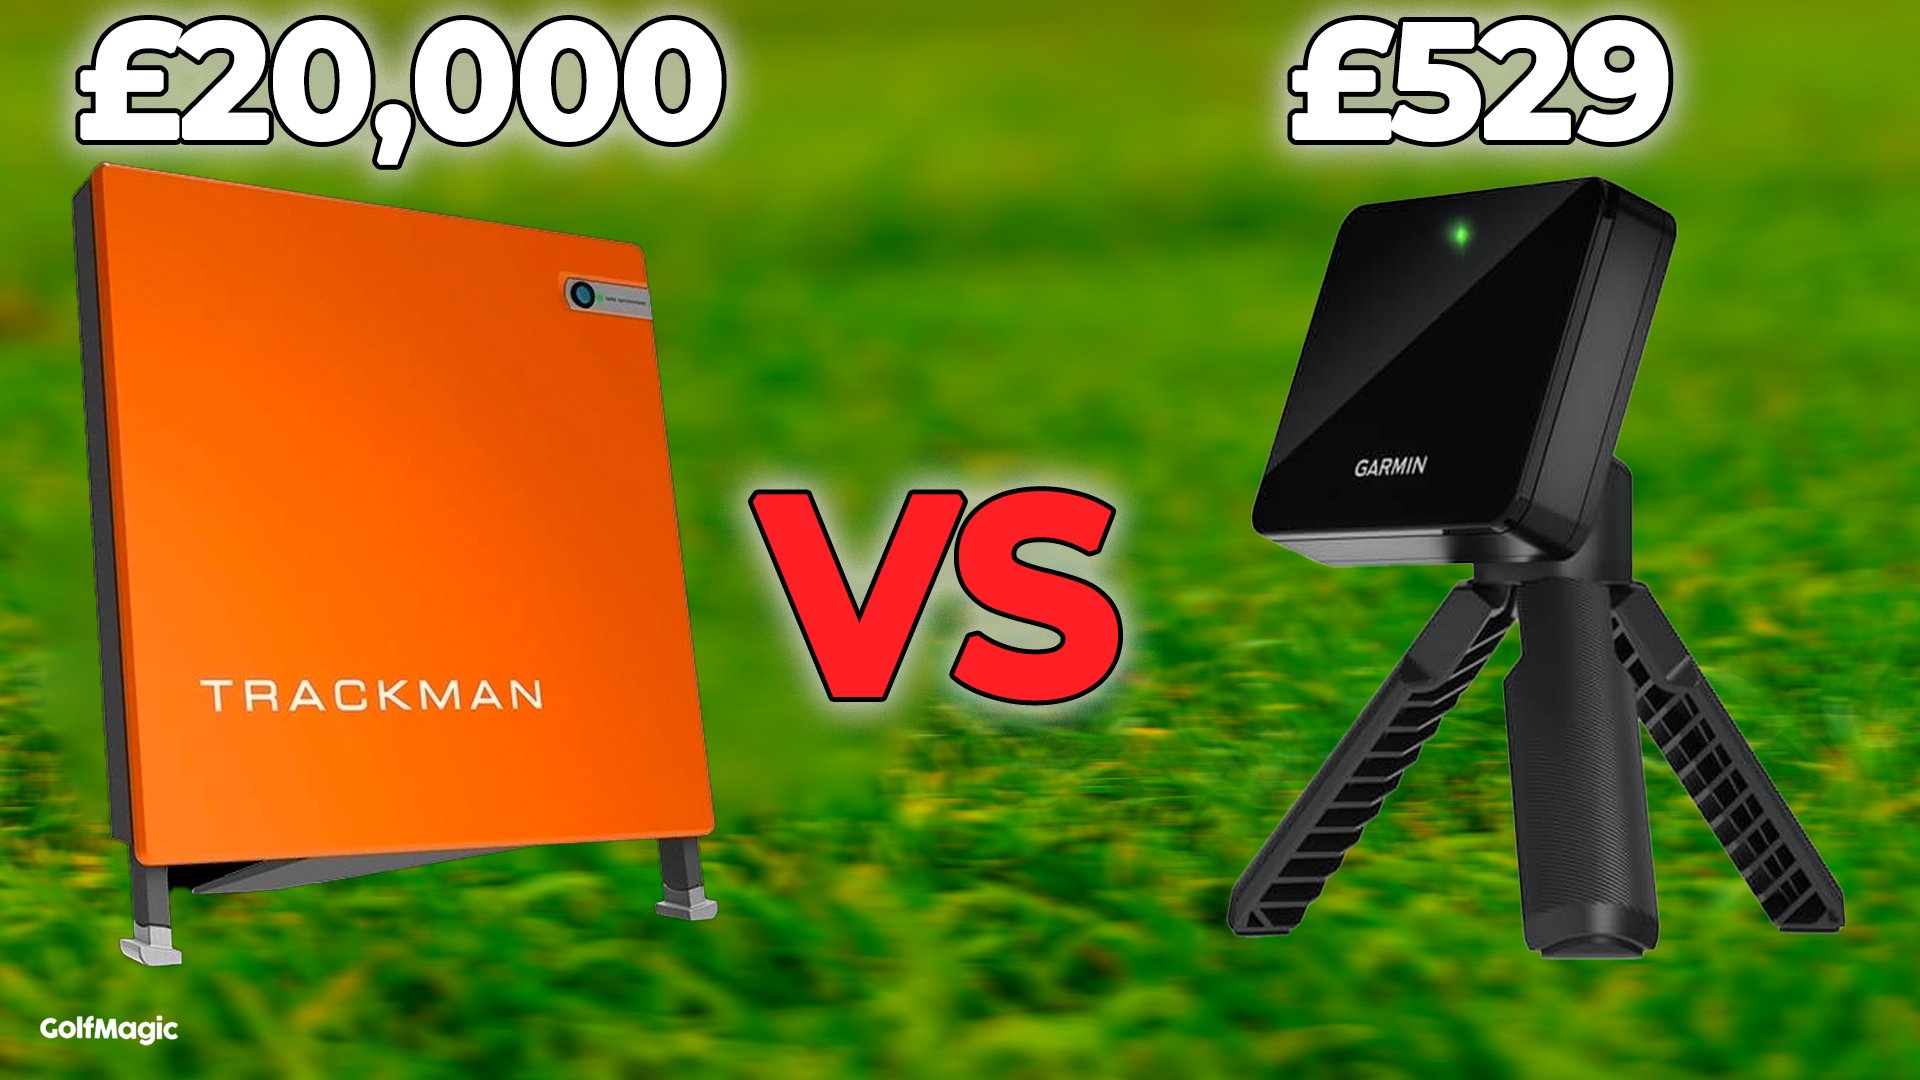 Garmin R10 vs Trackman - Who will win the INDOOR ACCURACY TEST? | GolfMagic